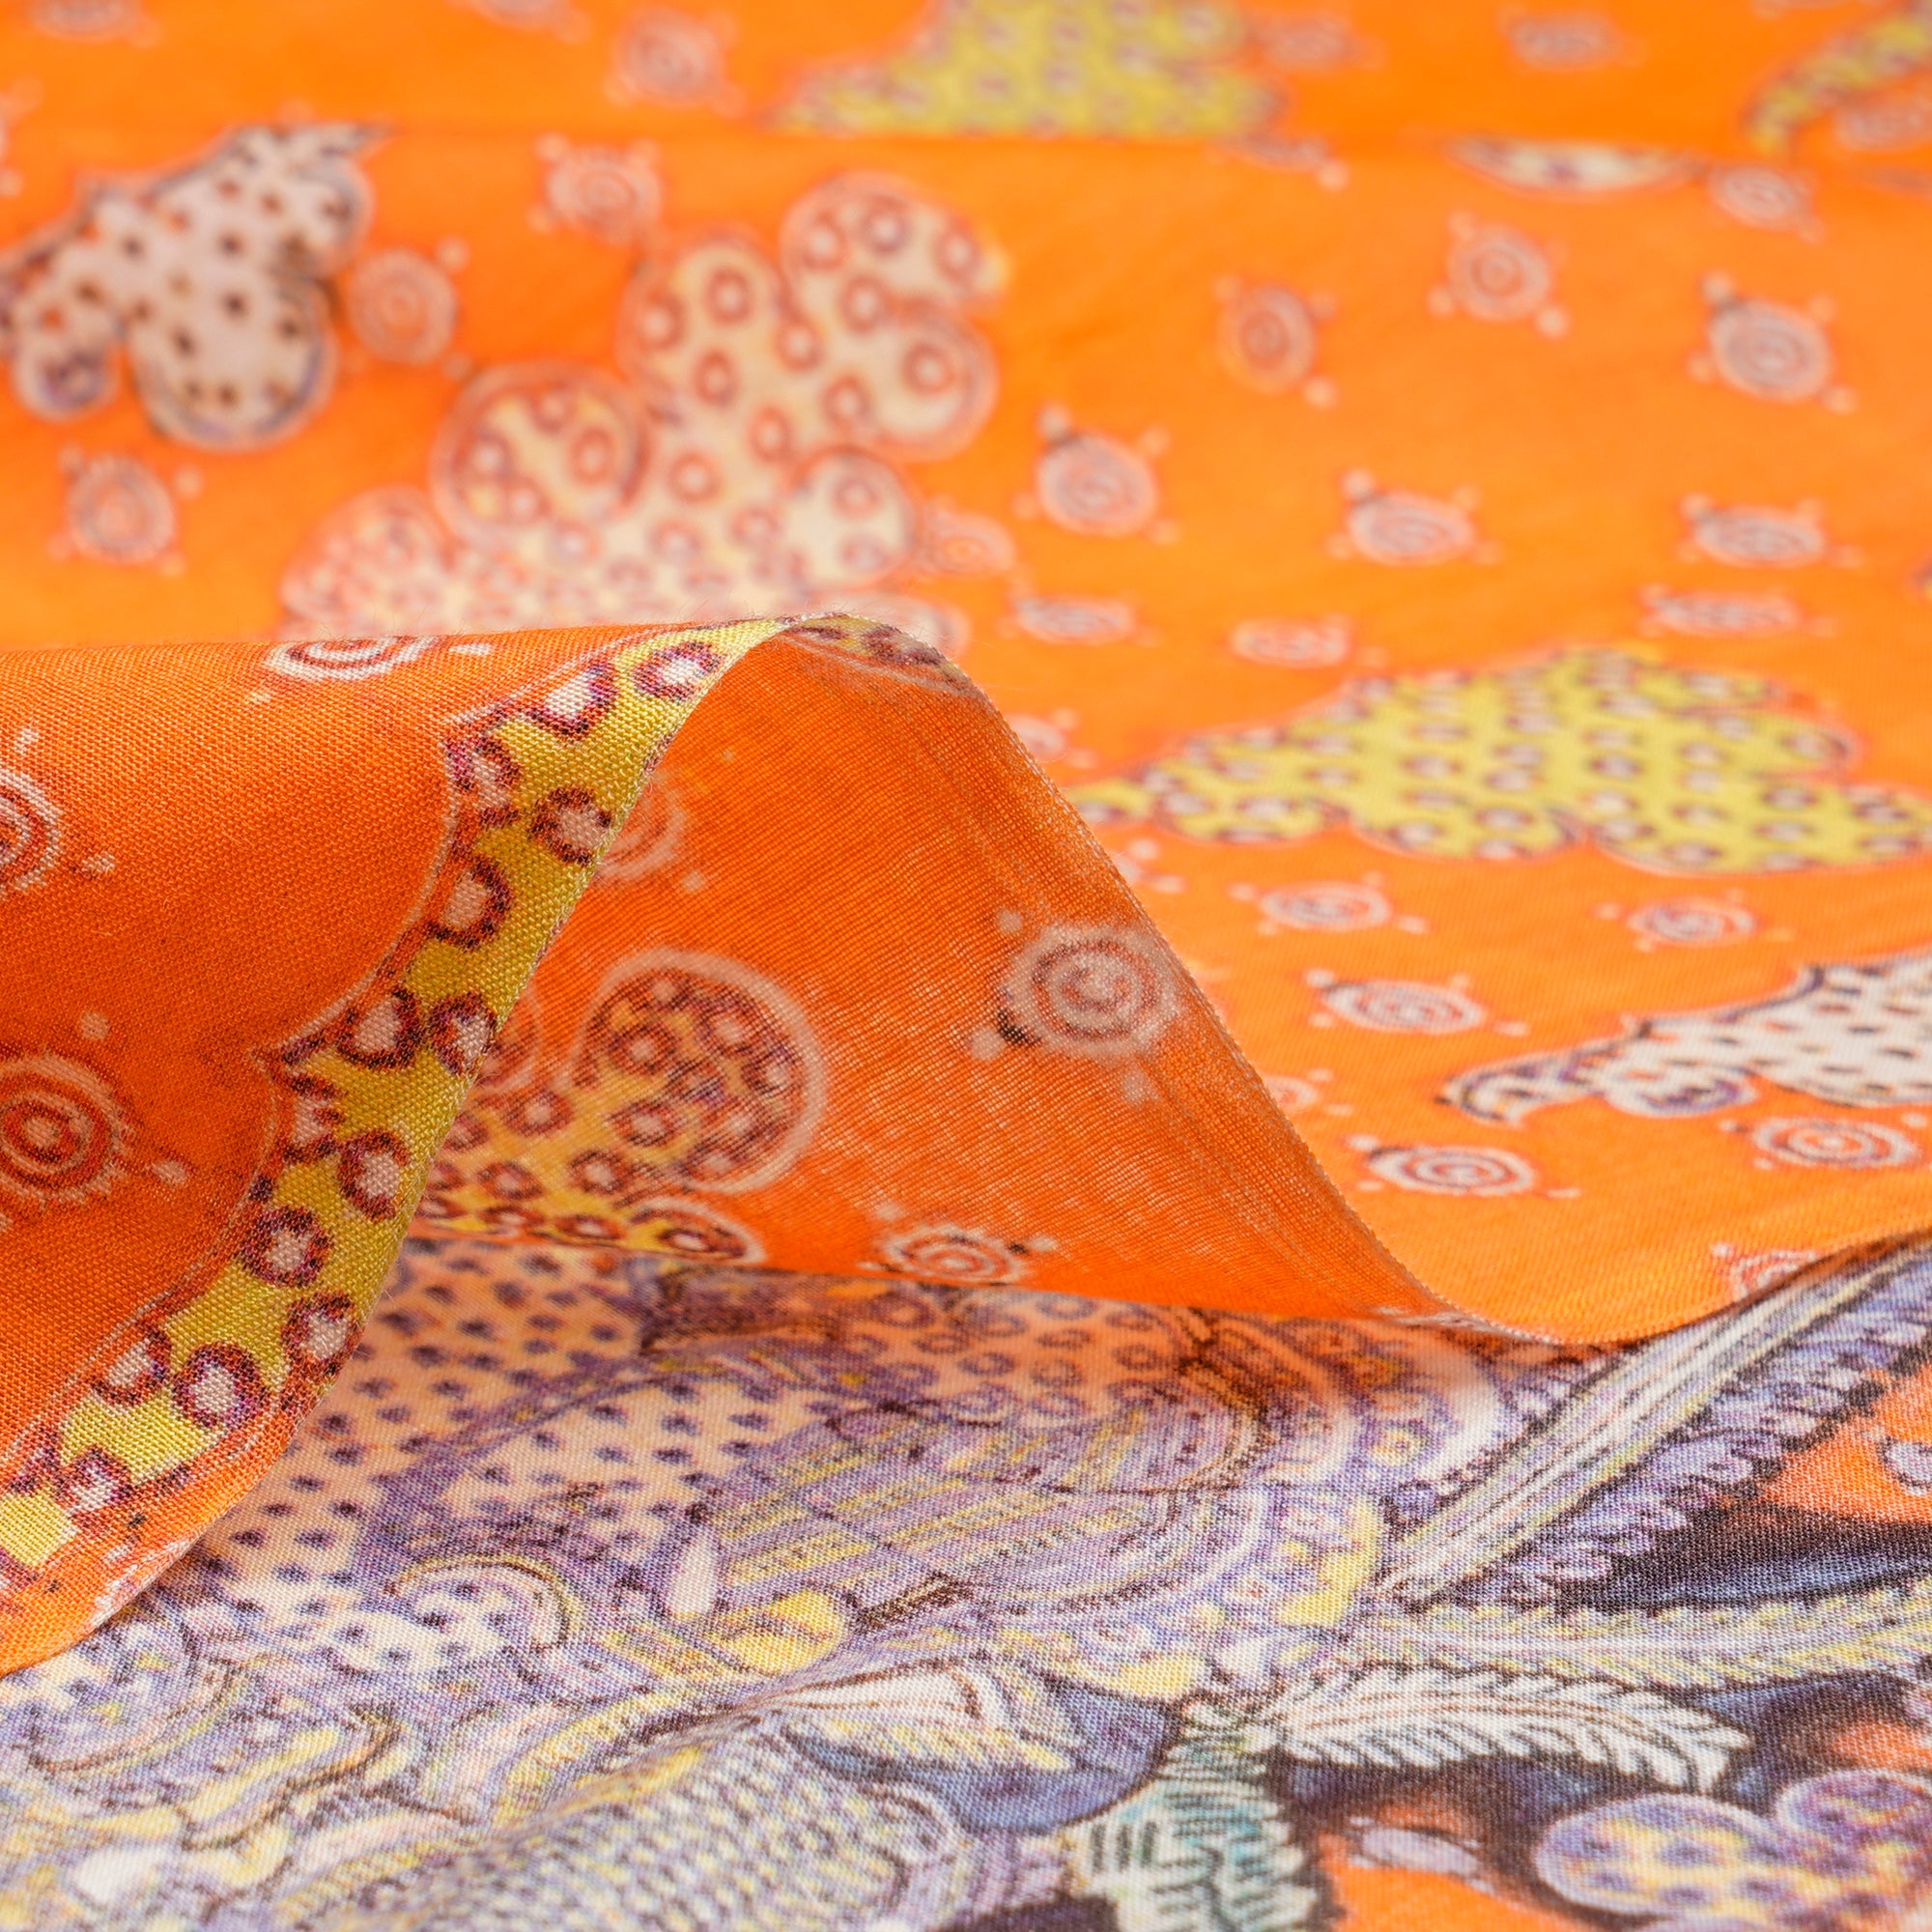 Orange Traditional Pattern Digital Print Tusser Chanderi Fabric